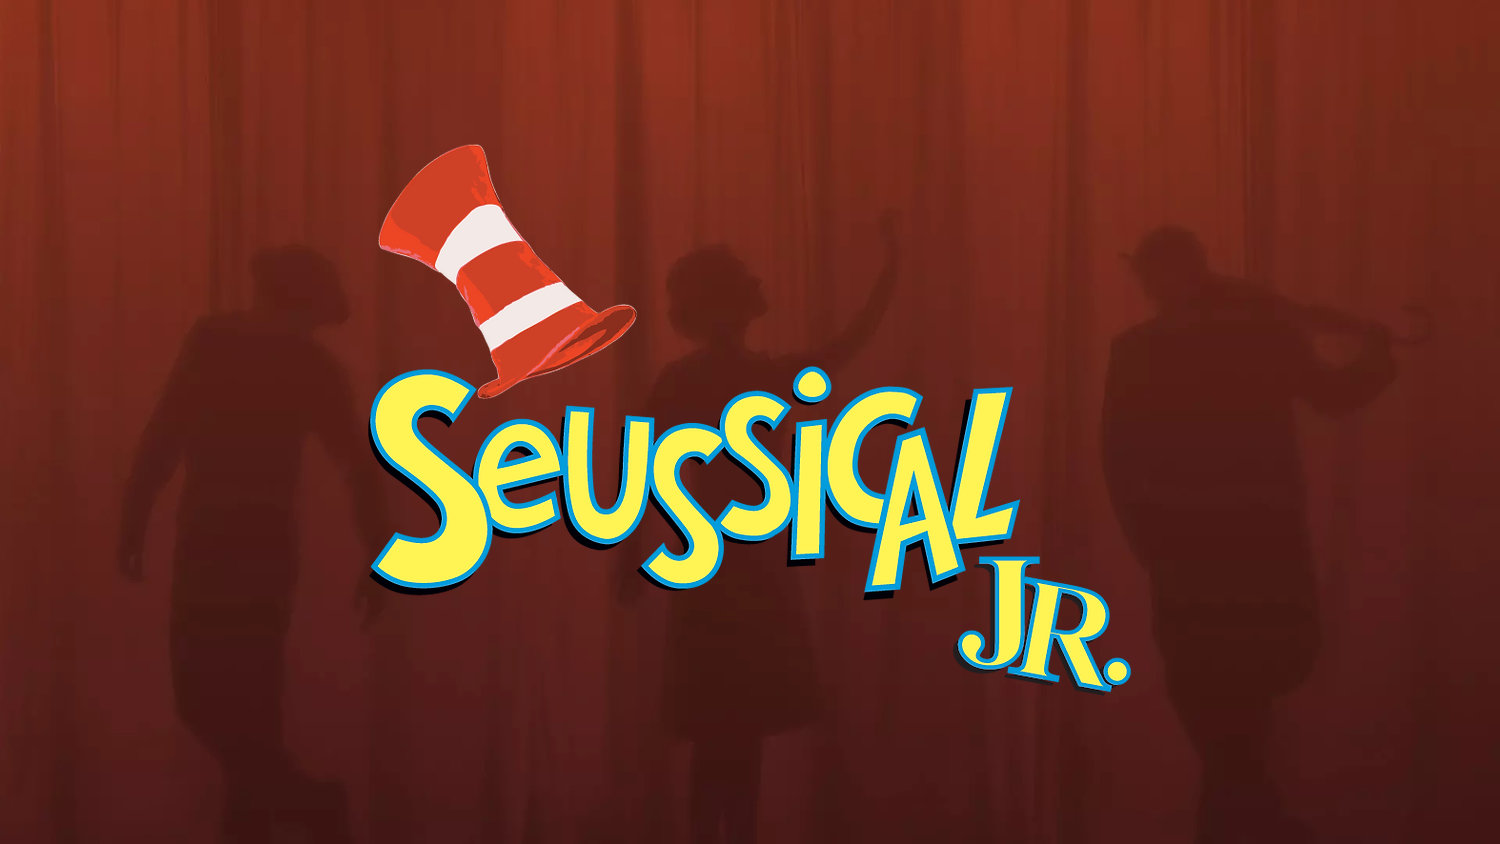 Seussical Jr logo